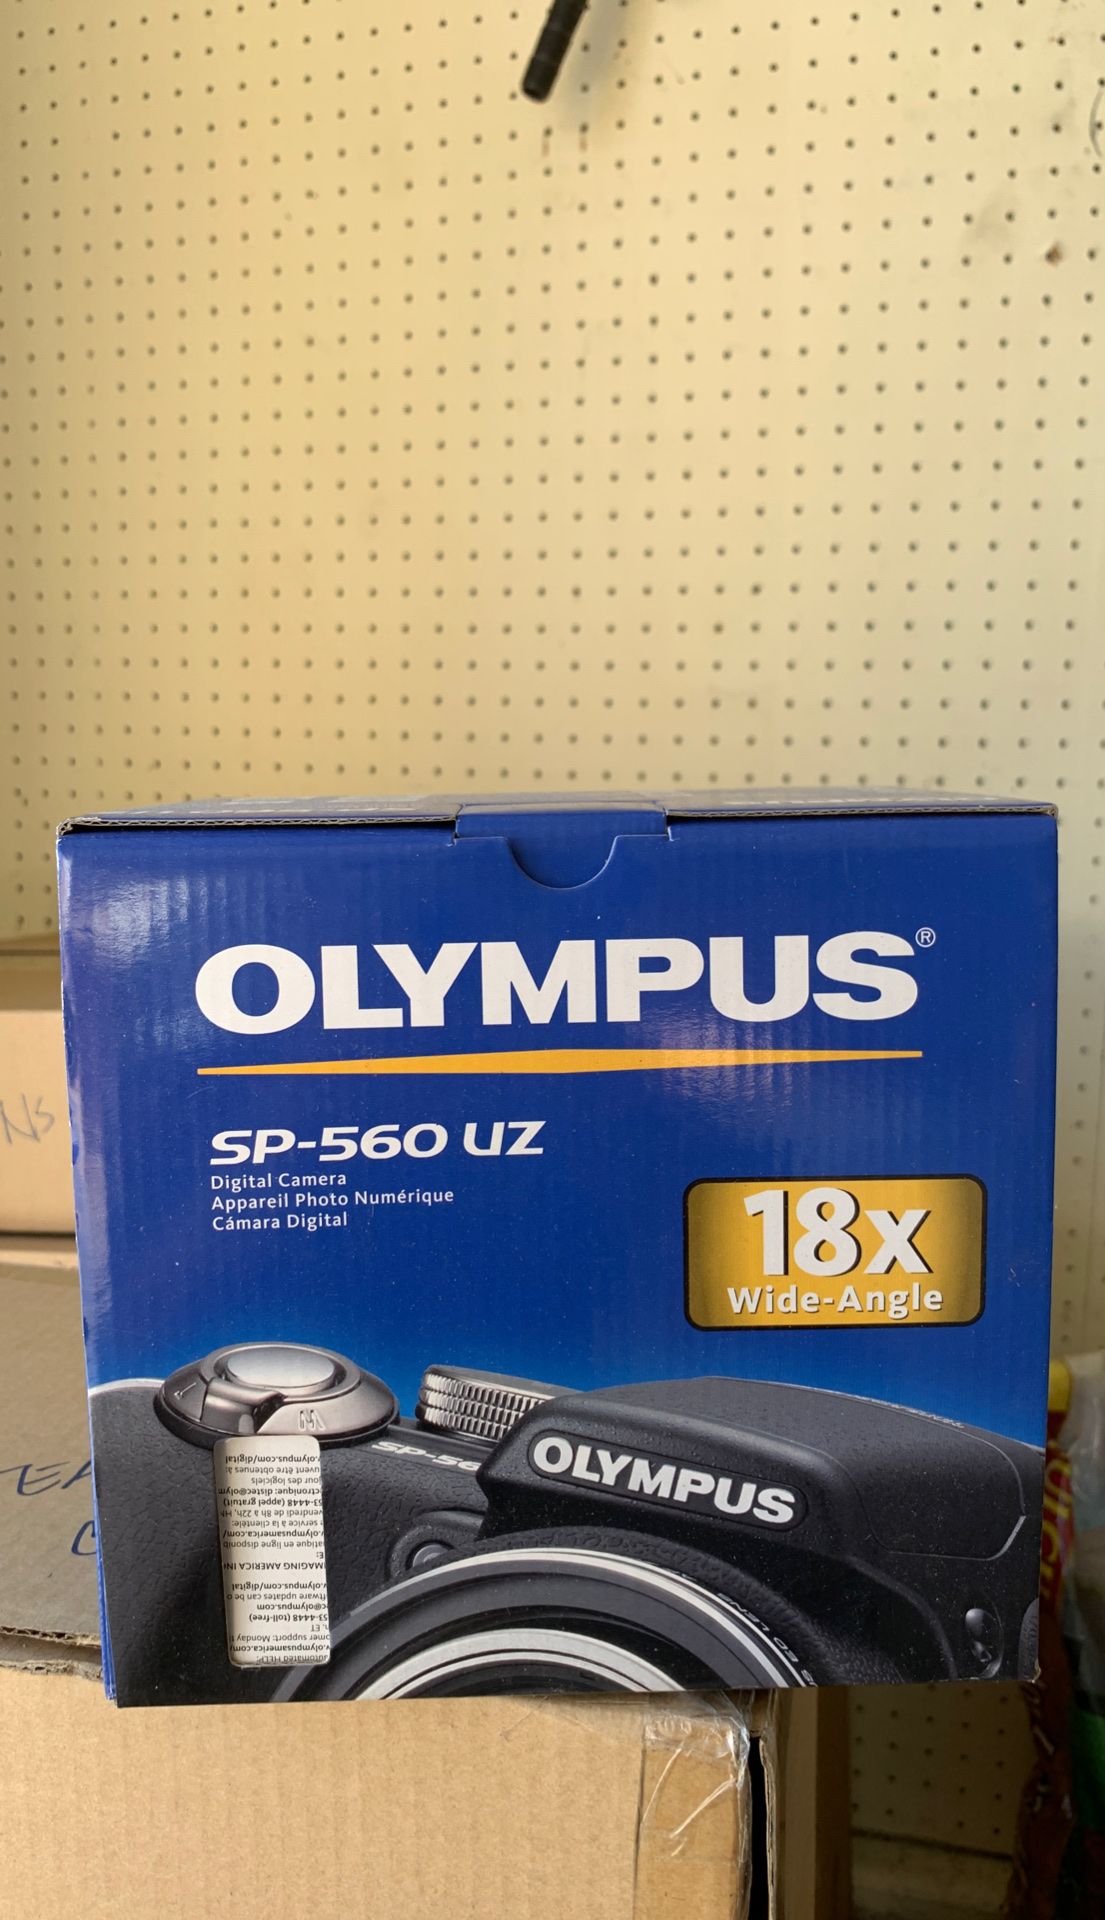 Digital Camera Olympus-new in box never used